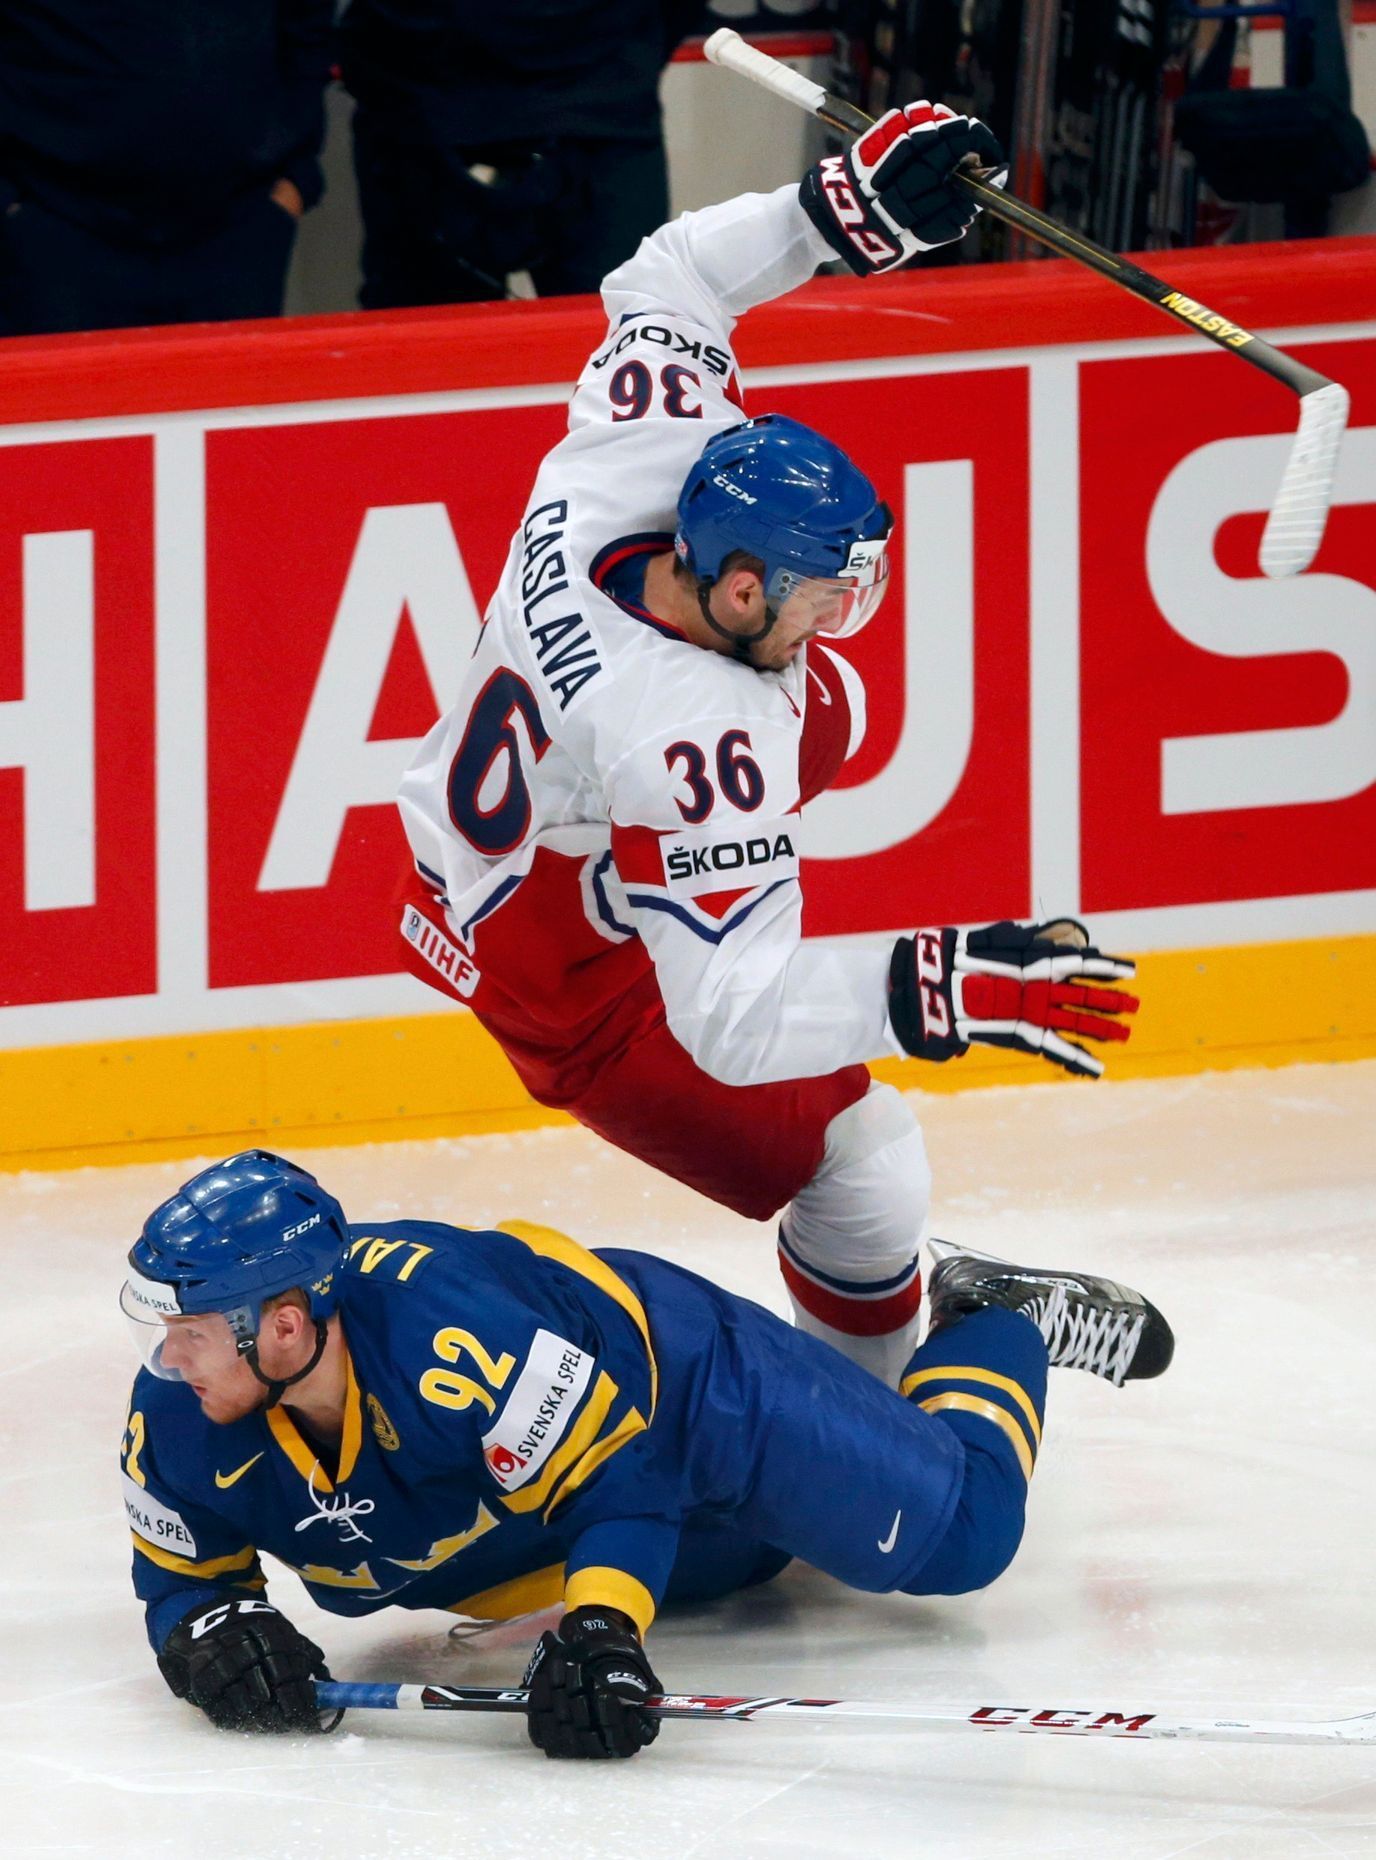 MS v hokeji 2013, Česko - Švédsko: Petr Čáslava - Gabriel Landeskog